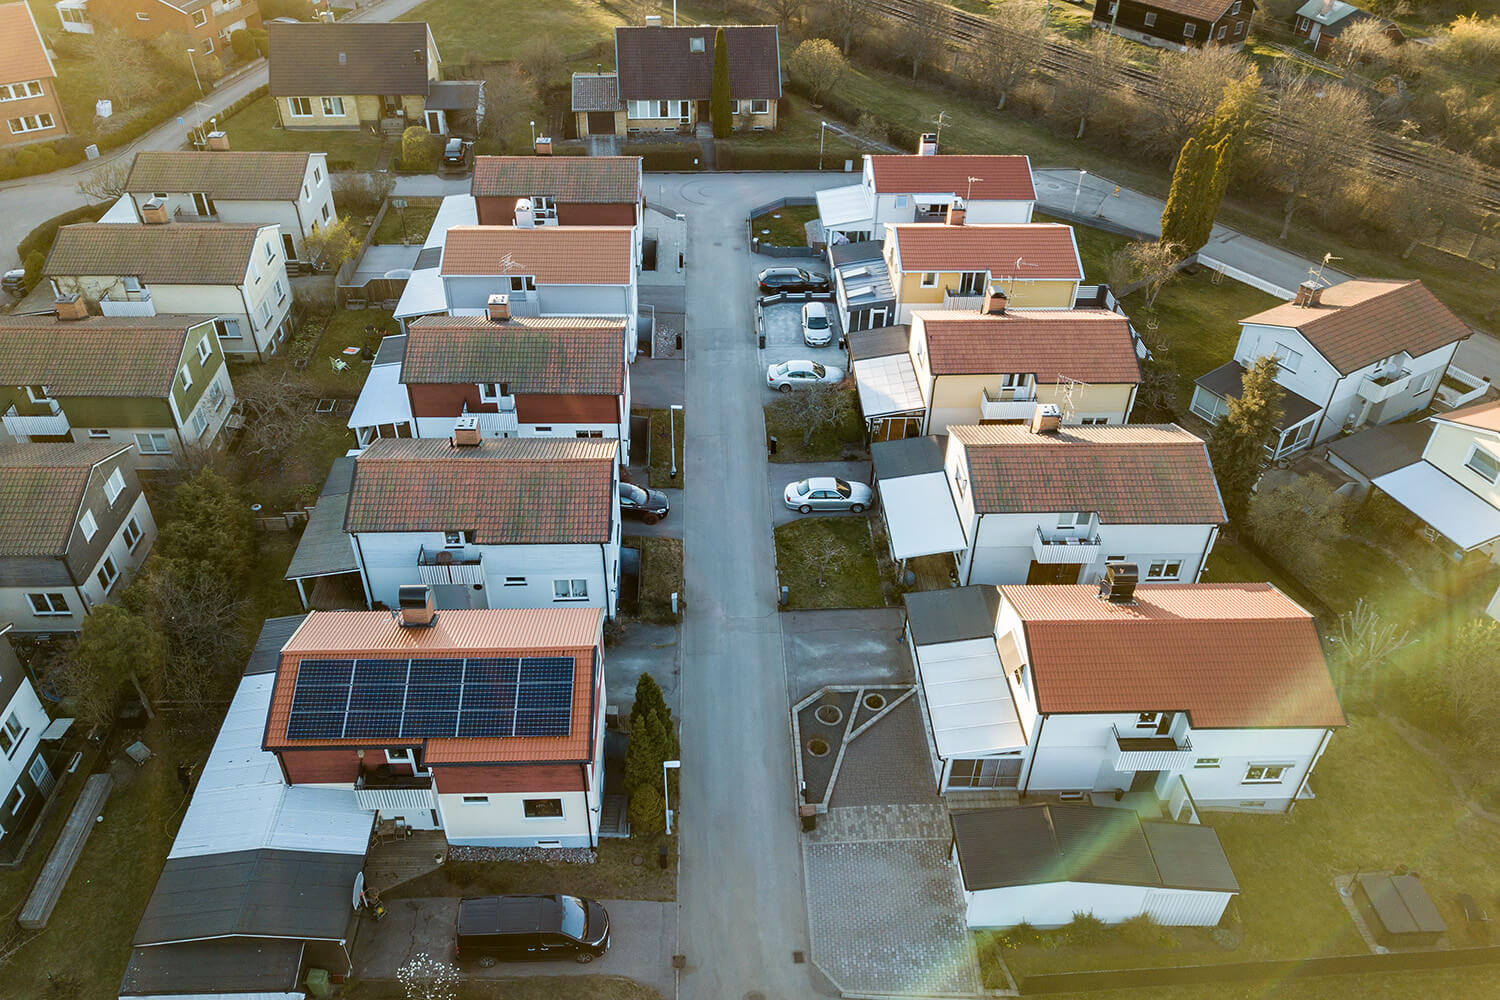 Drone view, high above housing development.